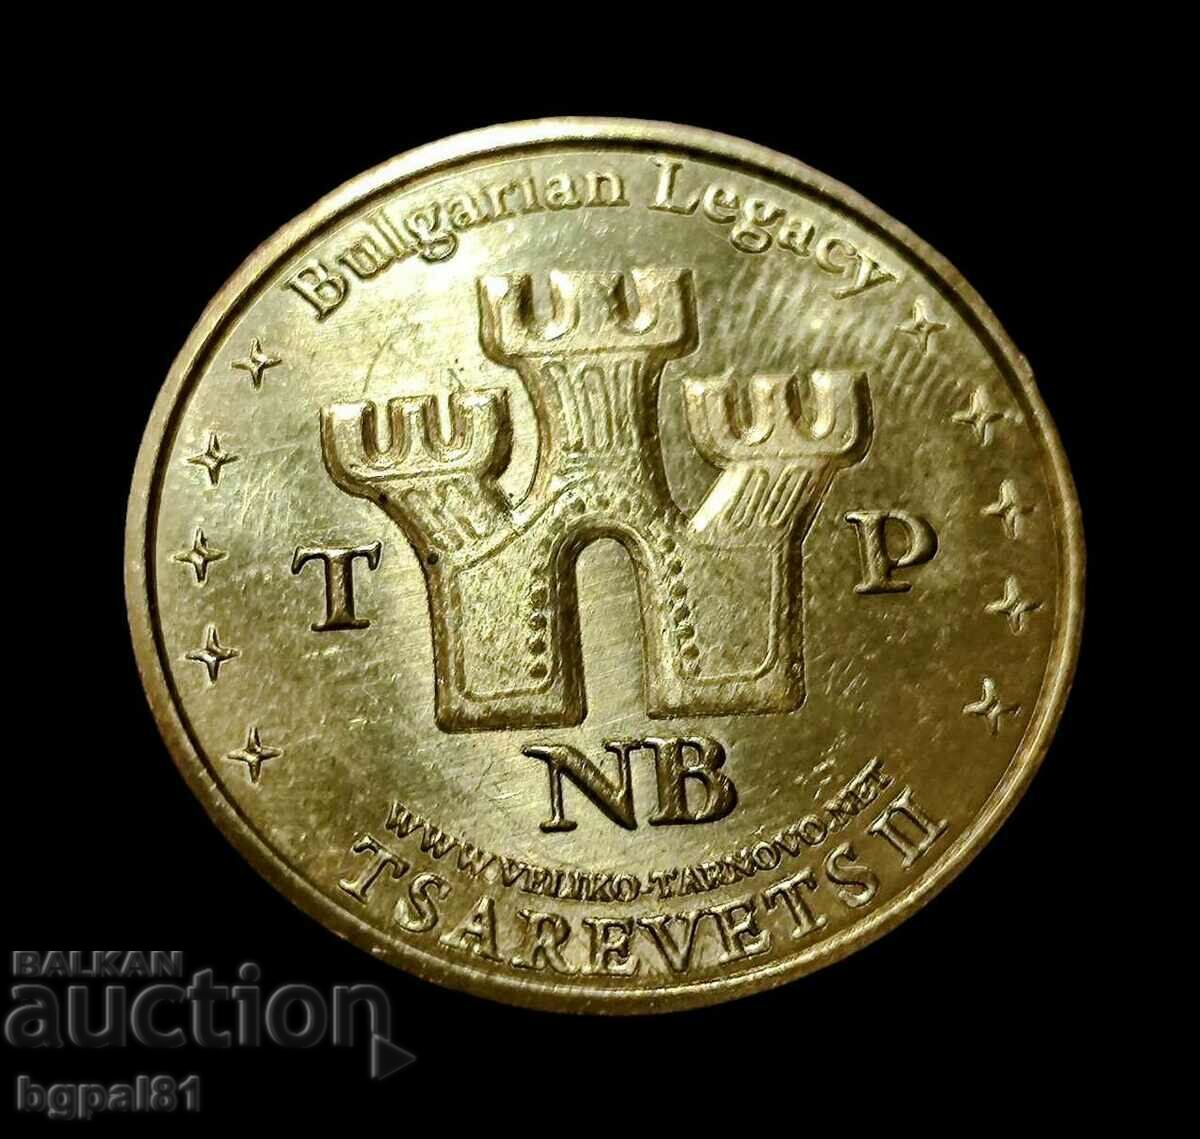 Tsarevets 2 Seal - Medal issue "Bulgarian legacy"